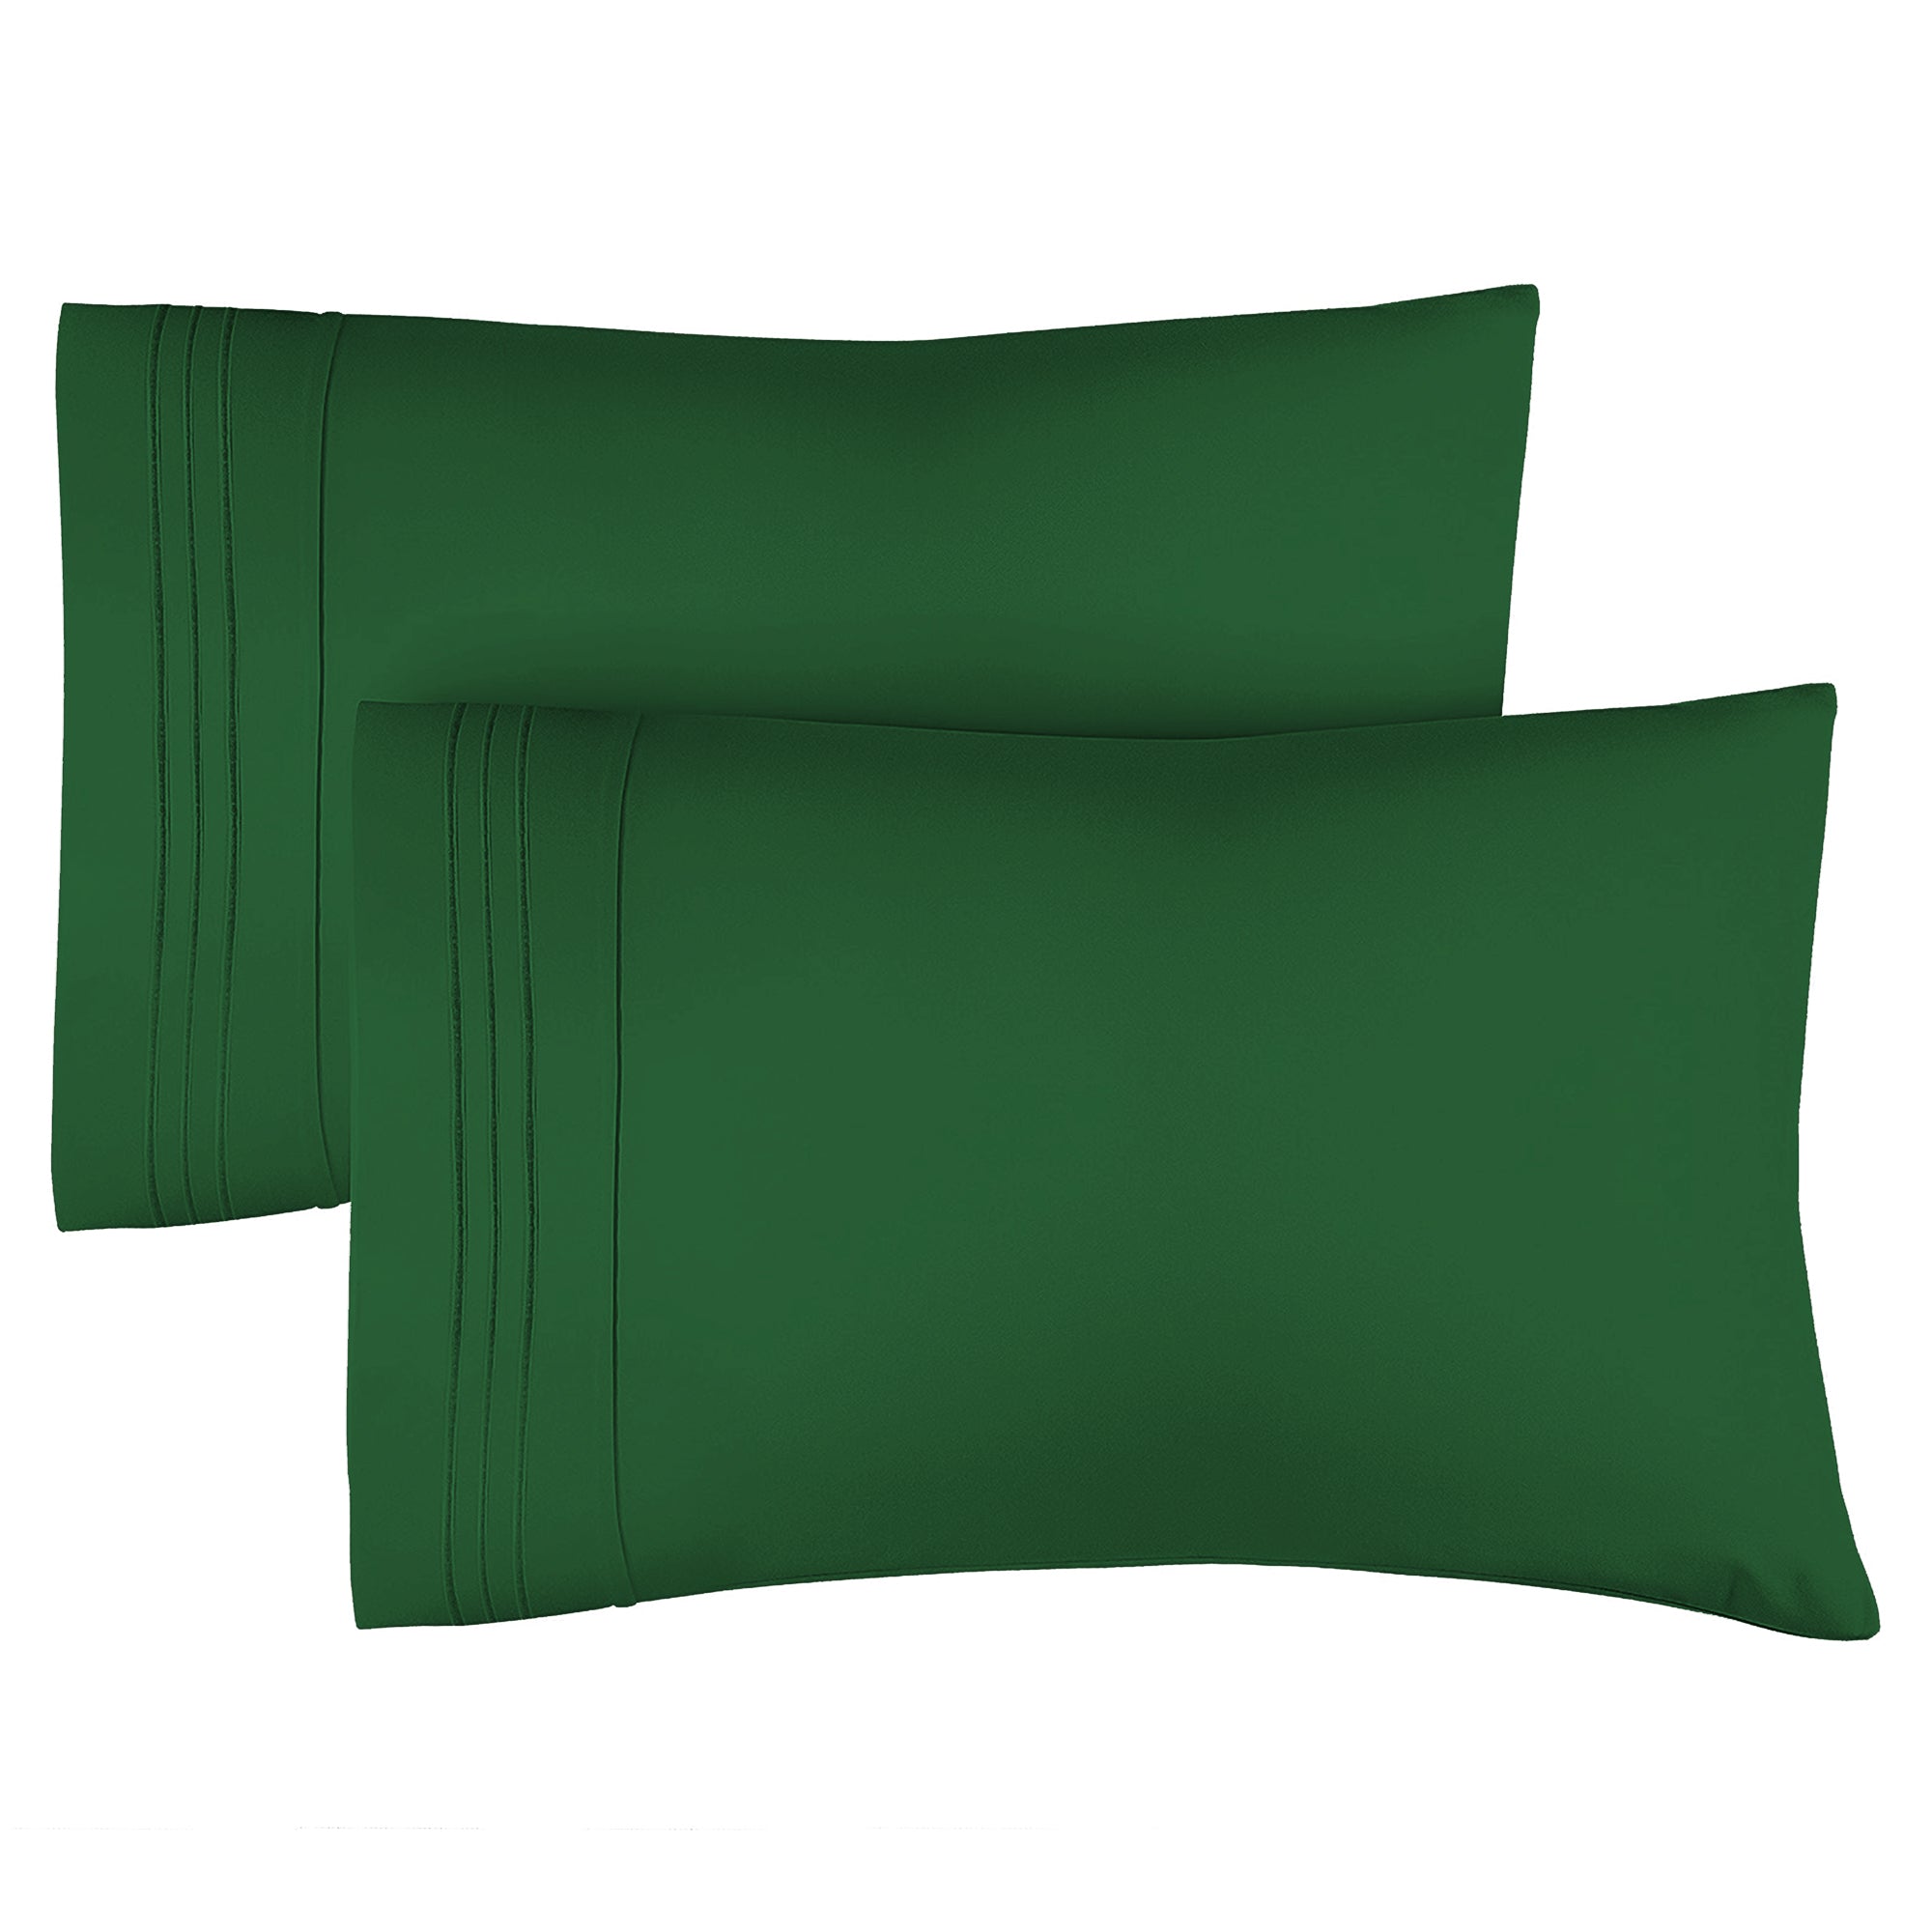 tes 2 Pillowcase Set - Emerald Green